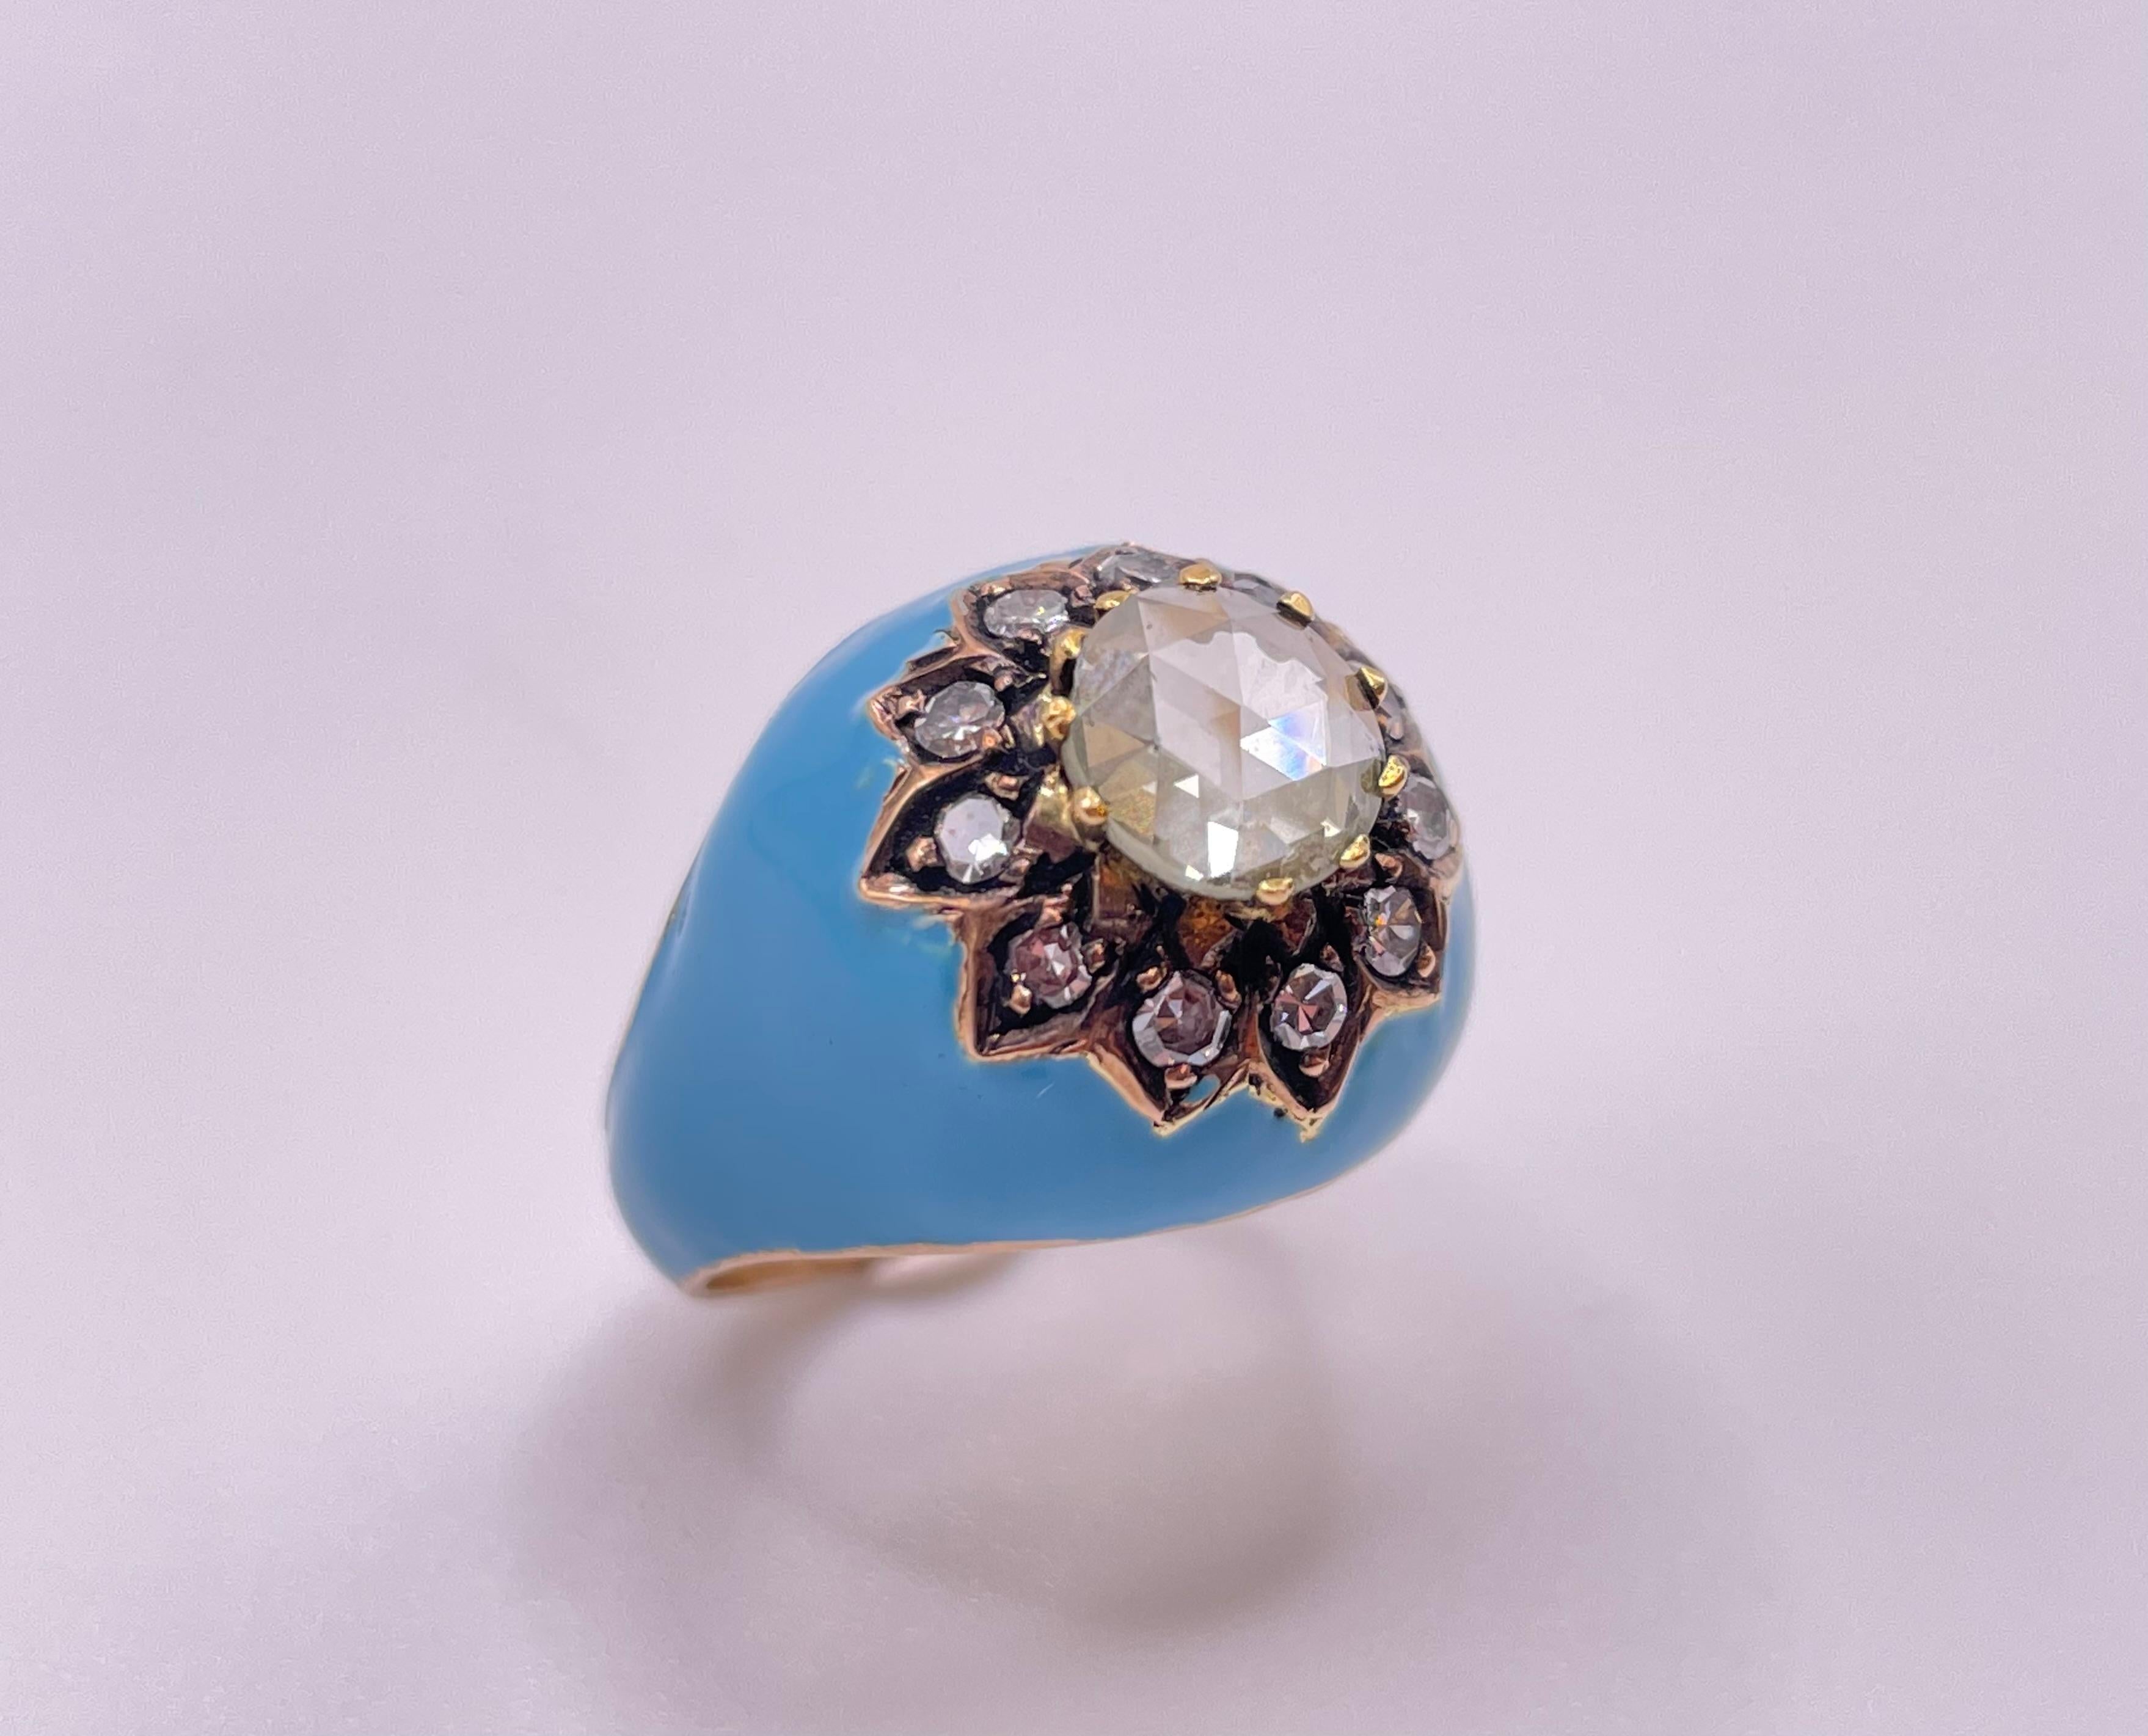 Sparkling Rose Cut Diamond Ring with Blue Enamel 1